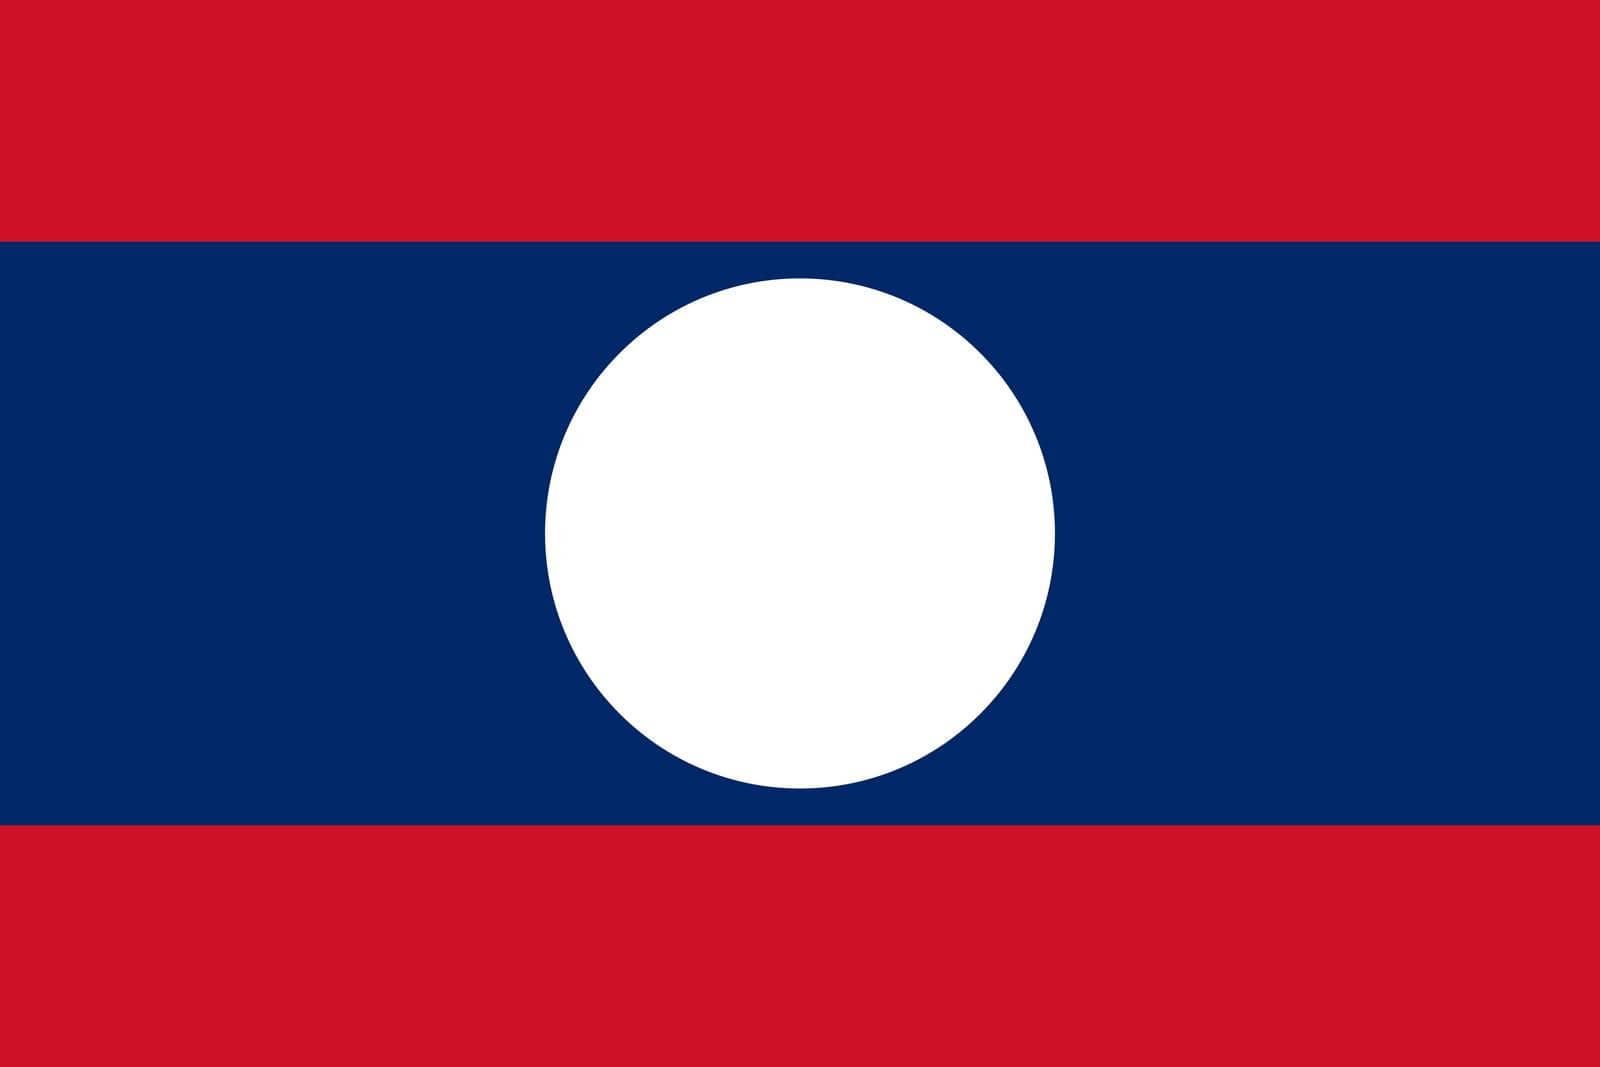 The flag of Laos vector illustration. Laos symbol